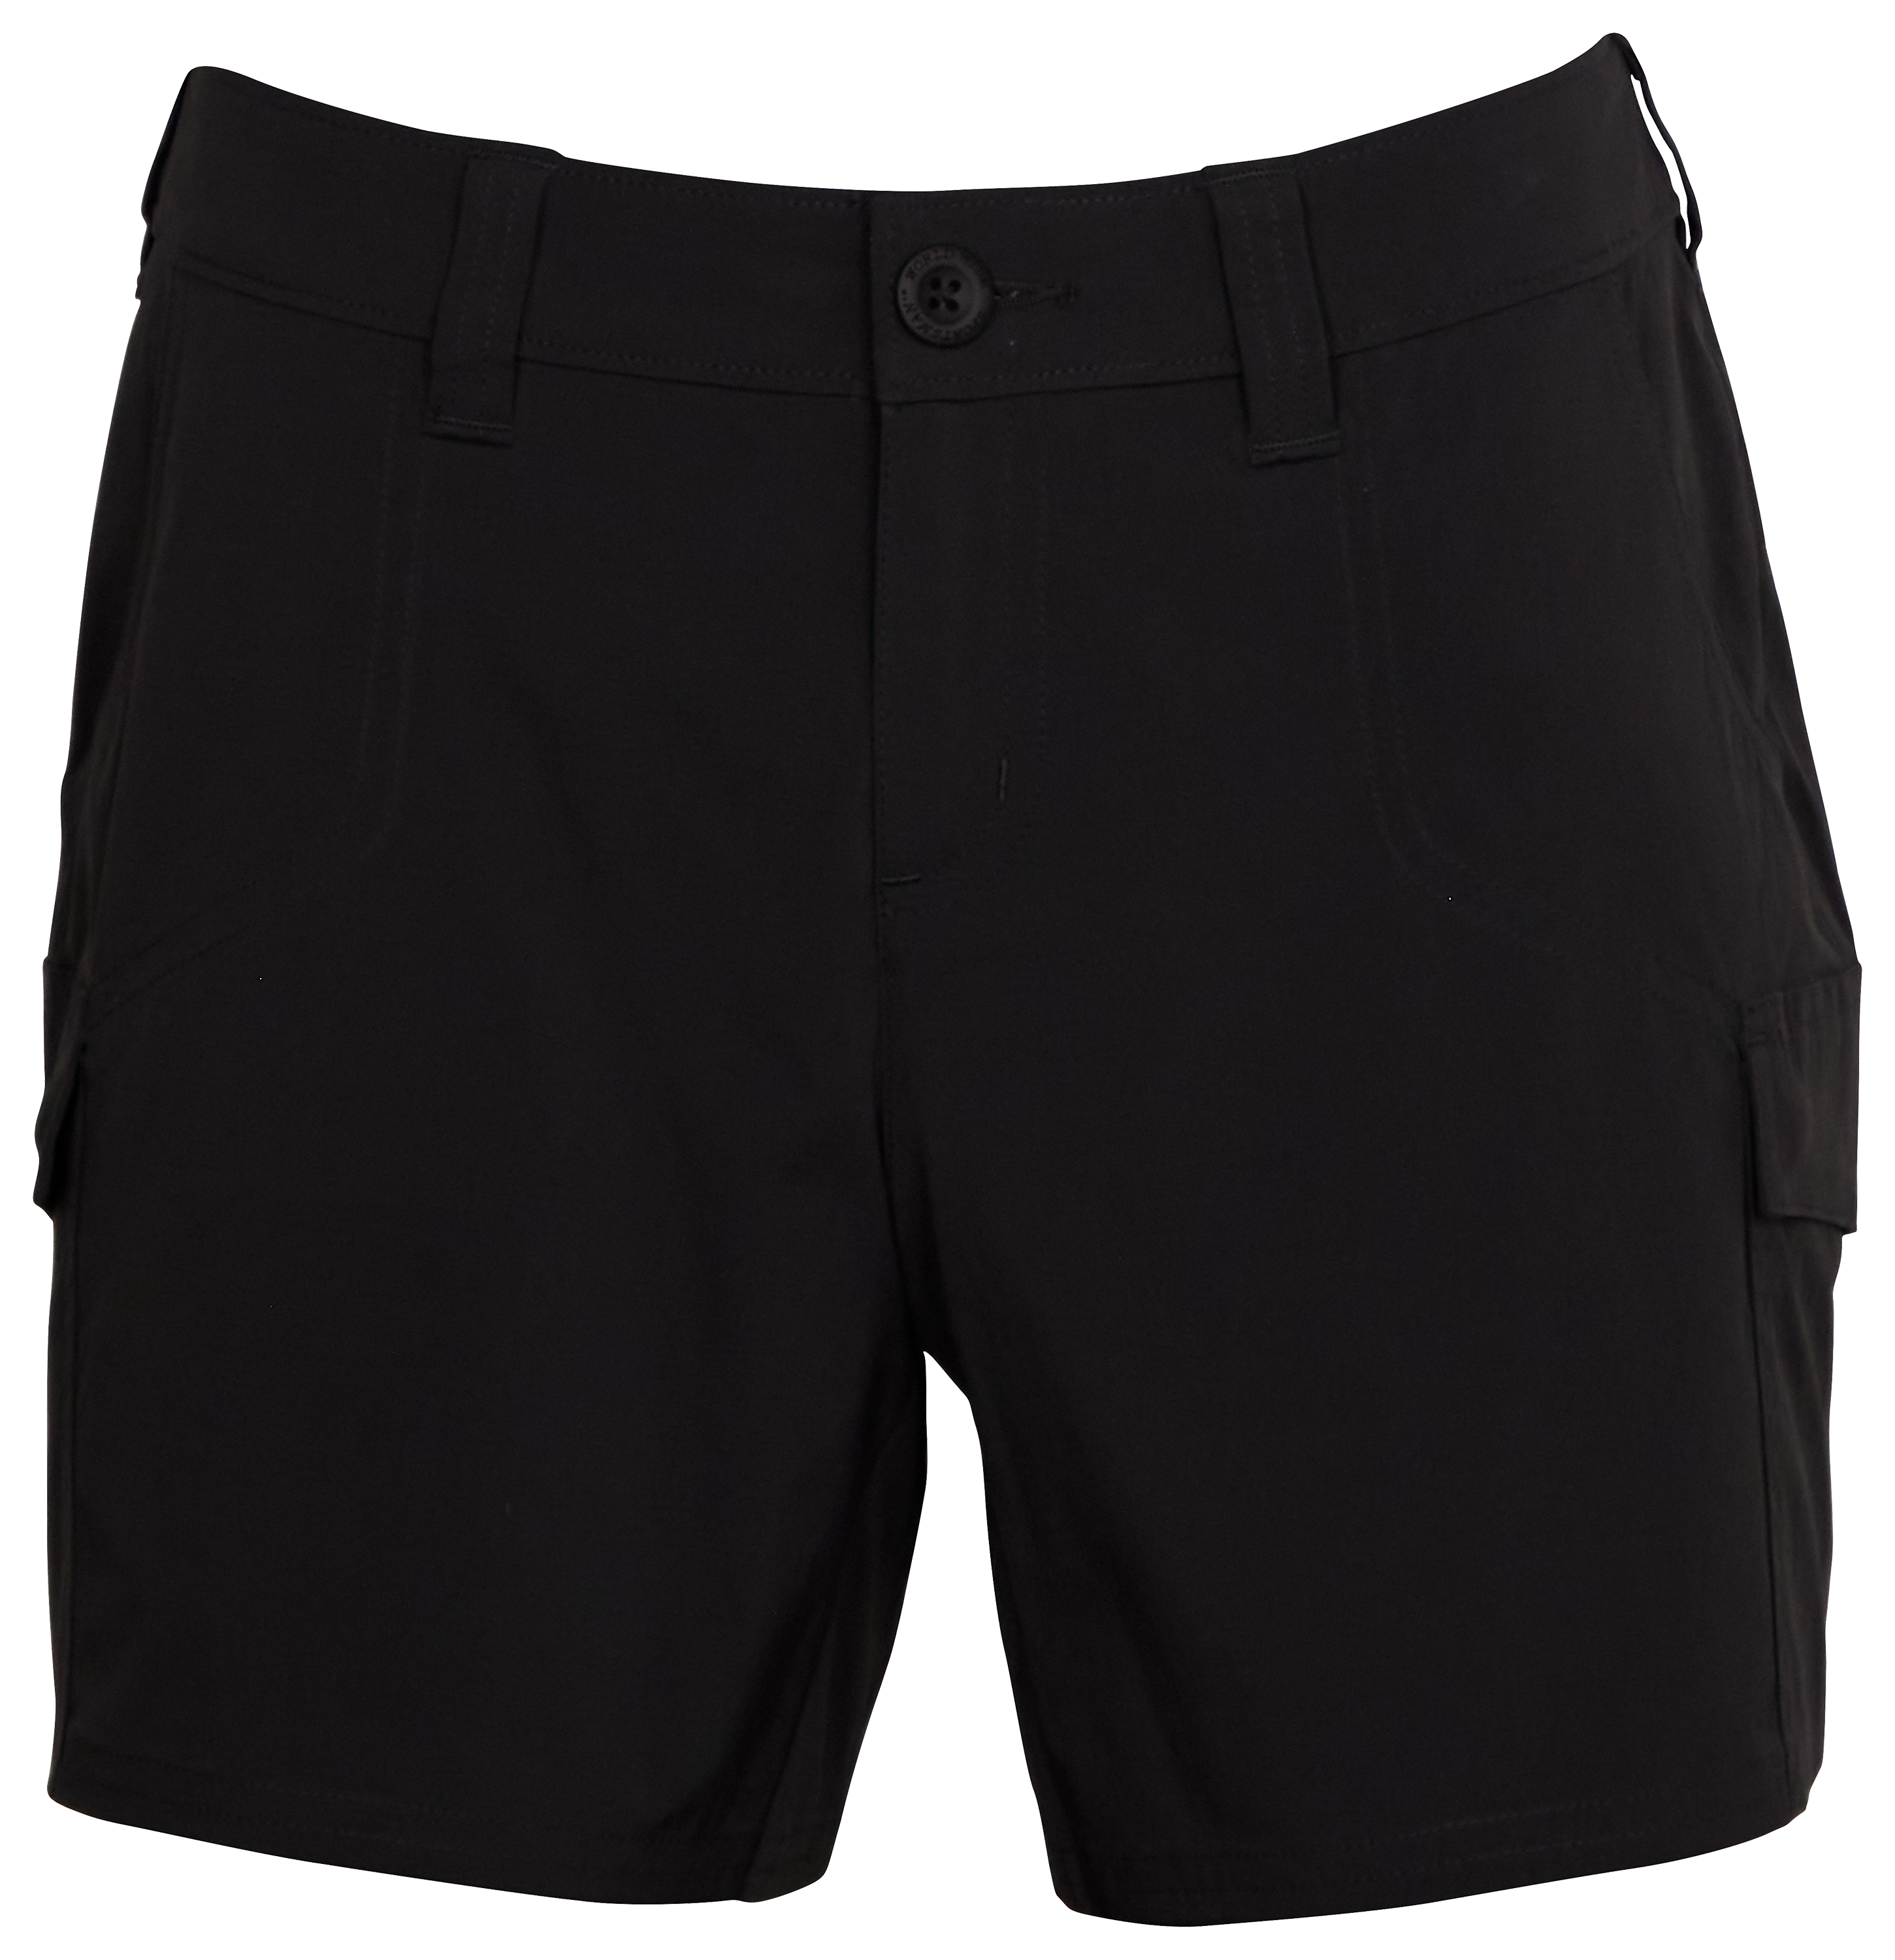 World Wide Sportsman Ripstop Cargo Shorts for Ladies - Jet Black - 4